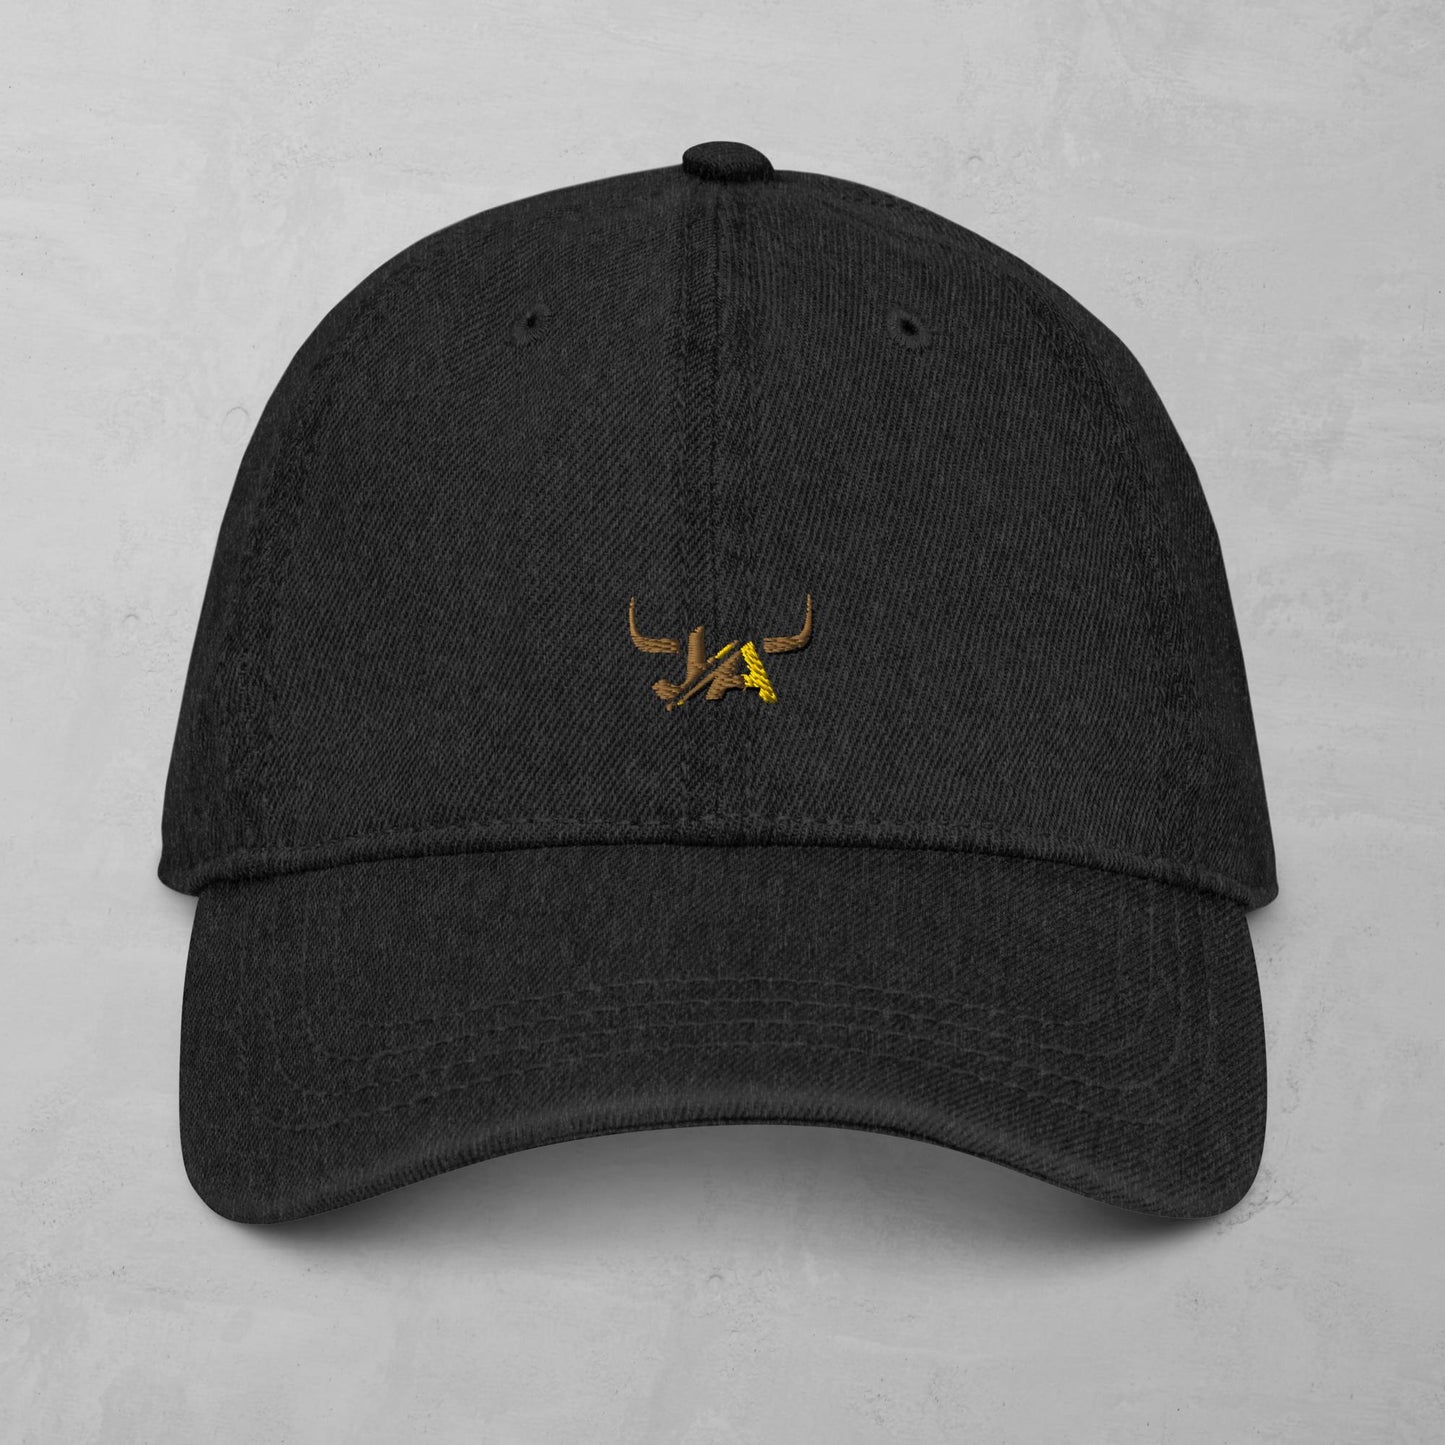 J.A Men's Denim Hat